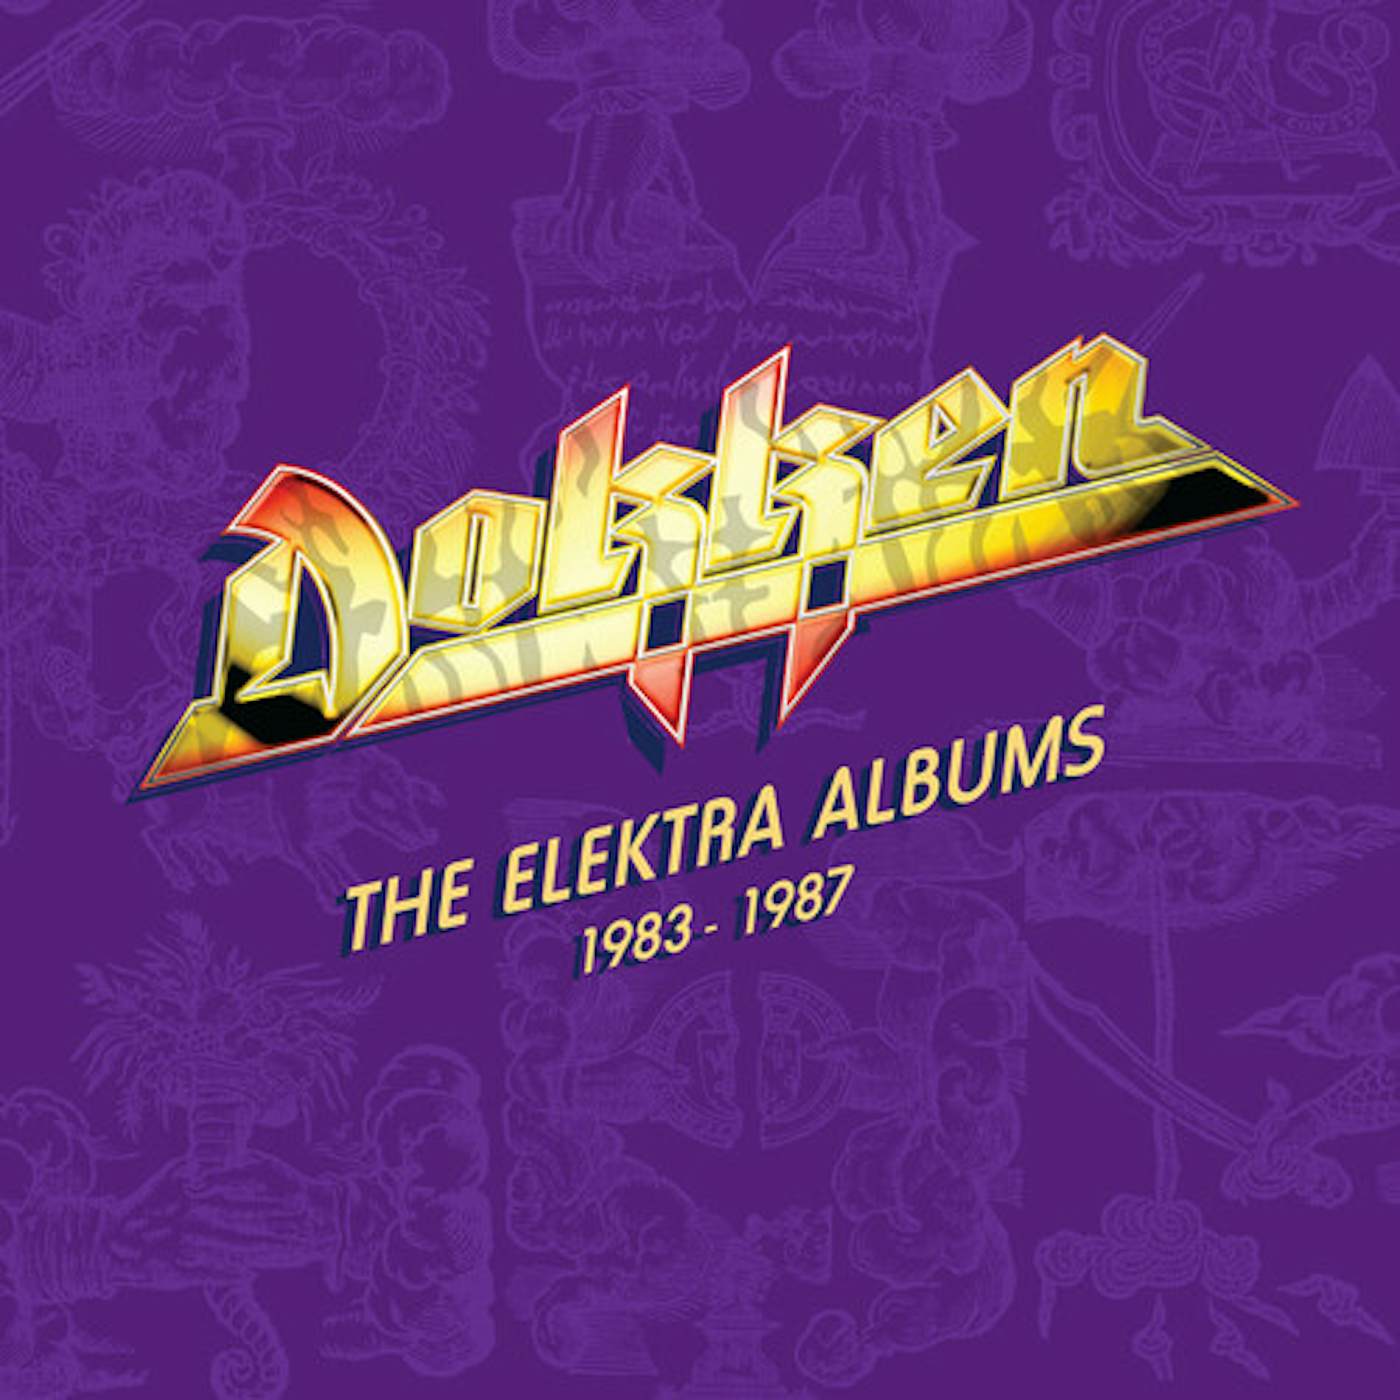 Dokken Elektra Albums 1983-1987 (Box set) Vinyl Record